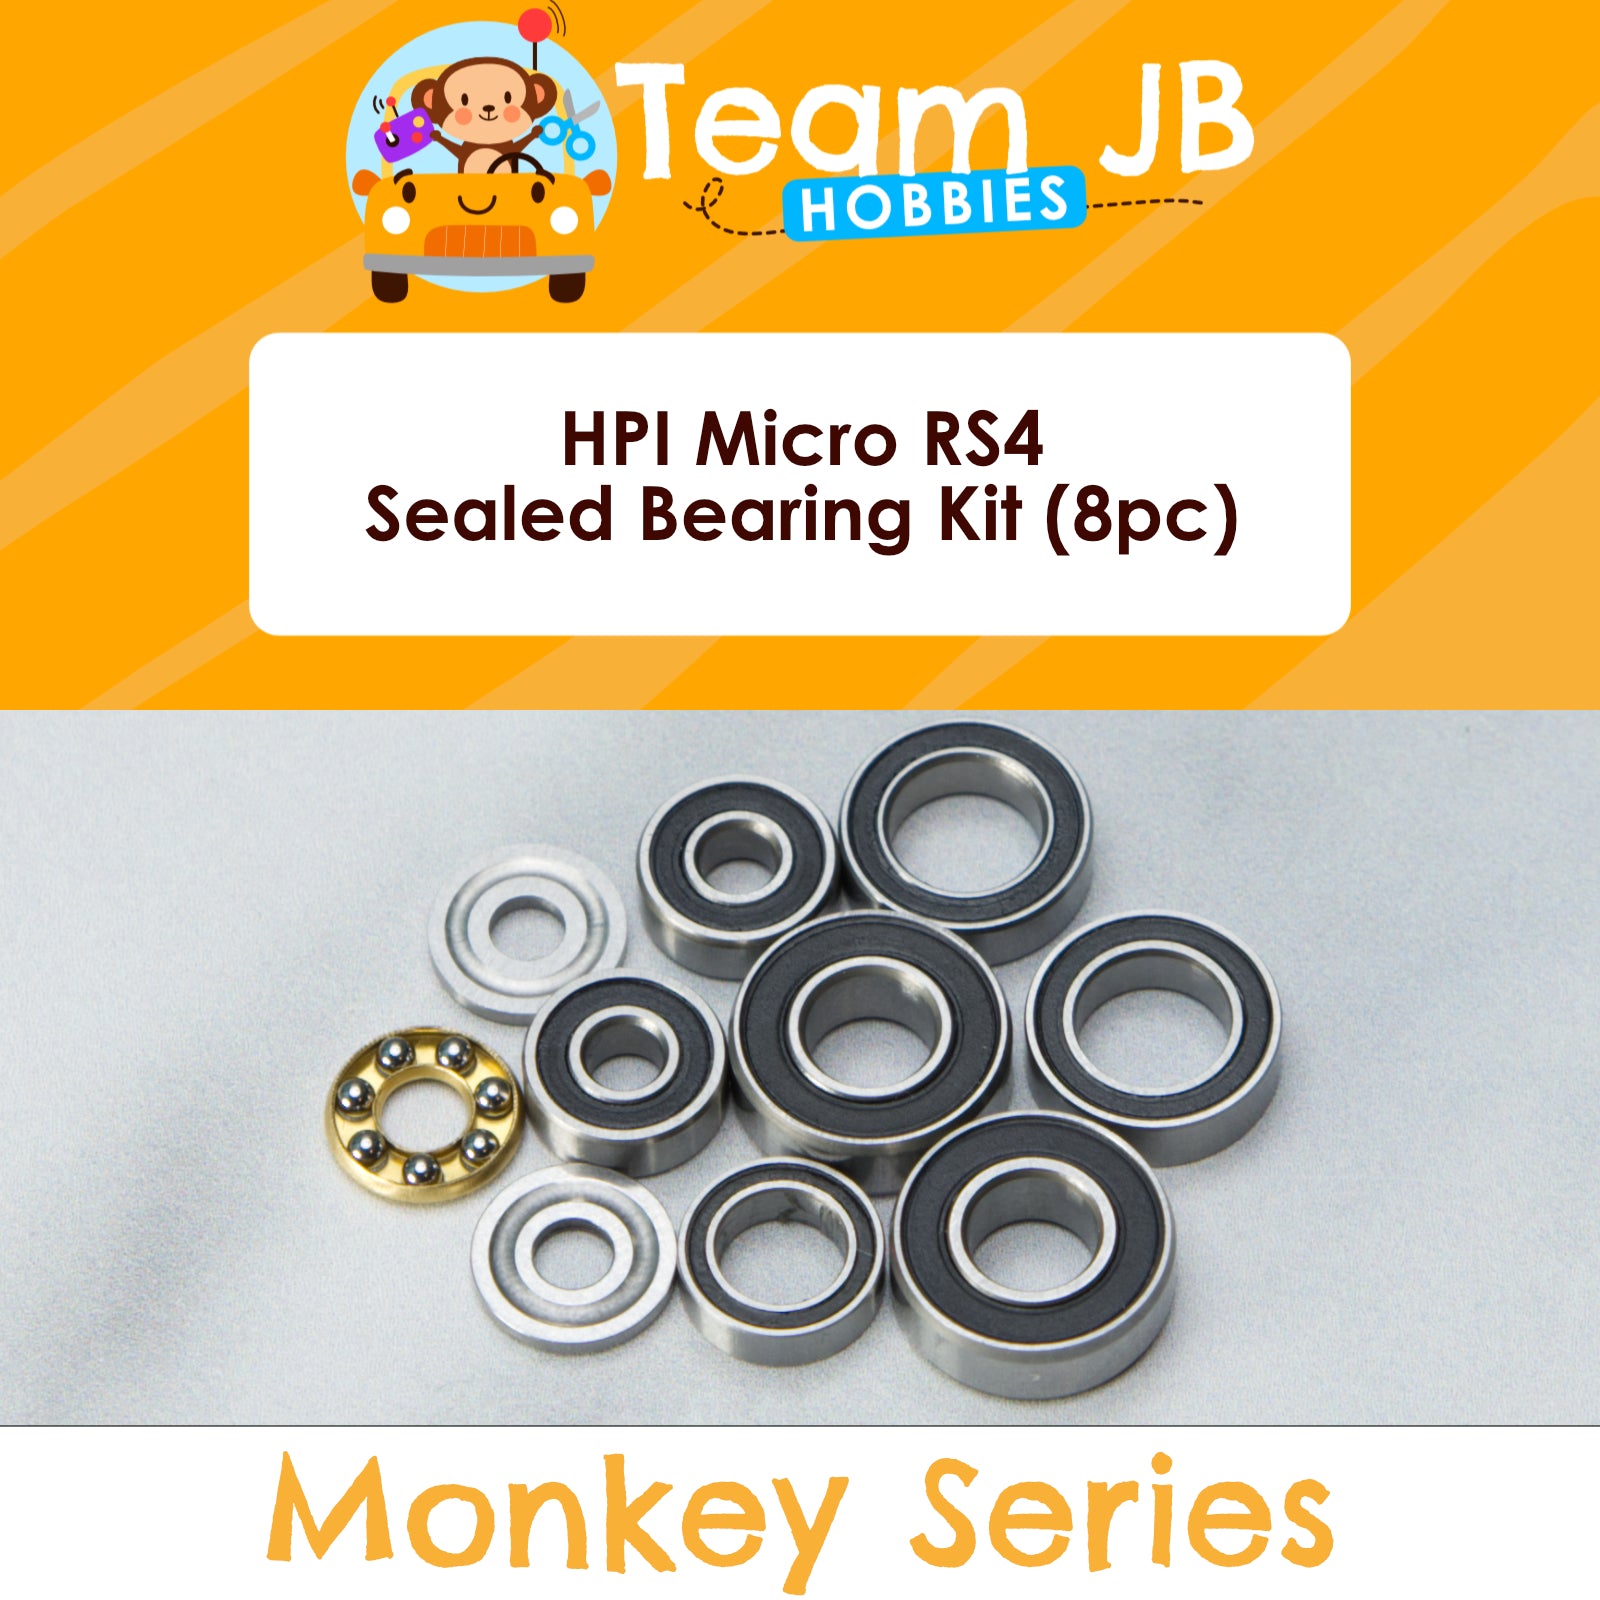 HPI Micro RS4 - Sealed Bearing Kit